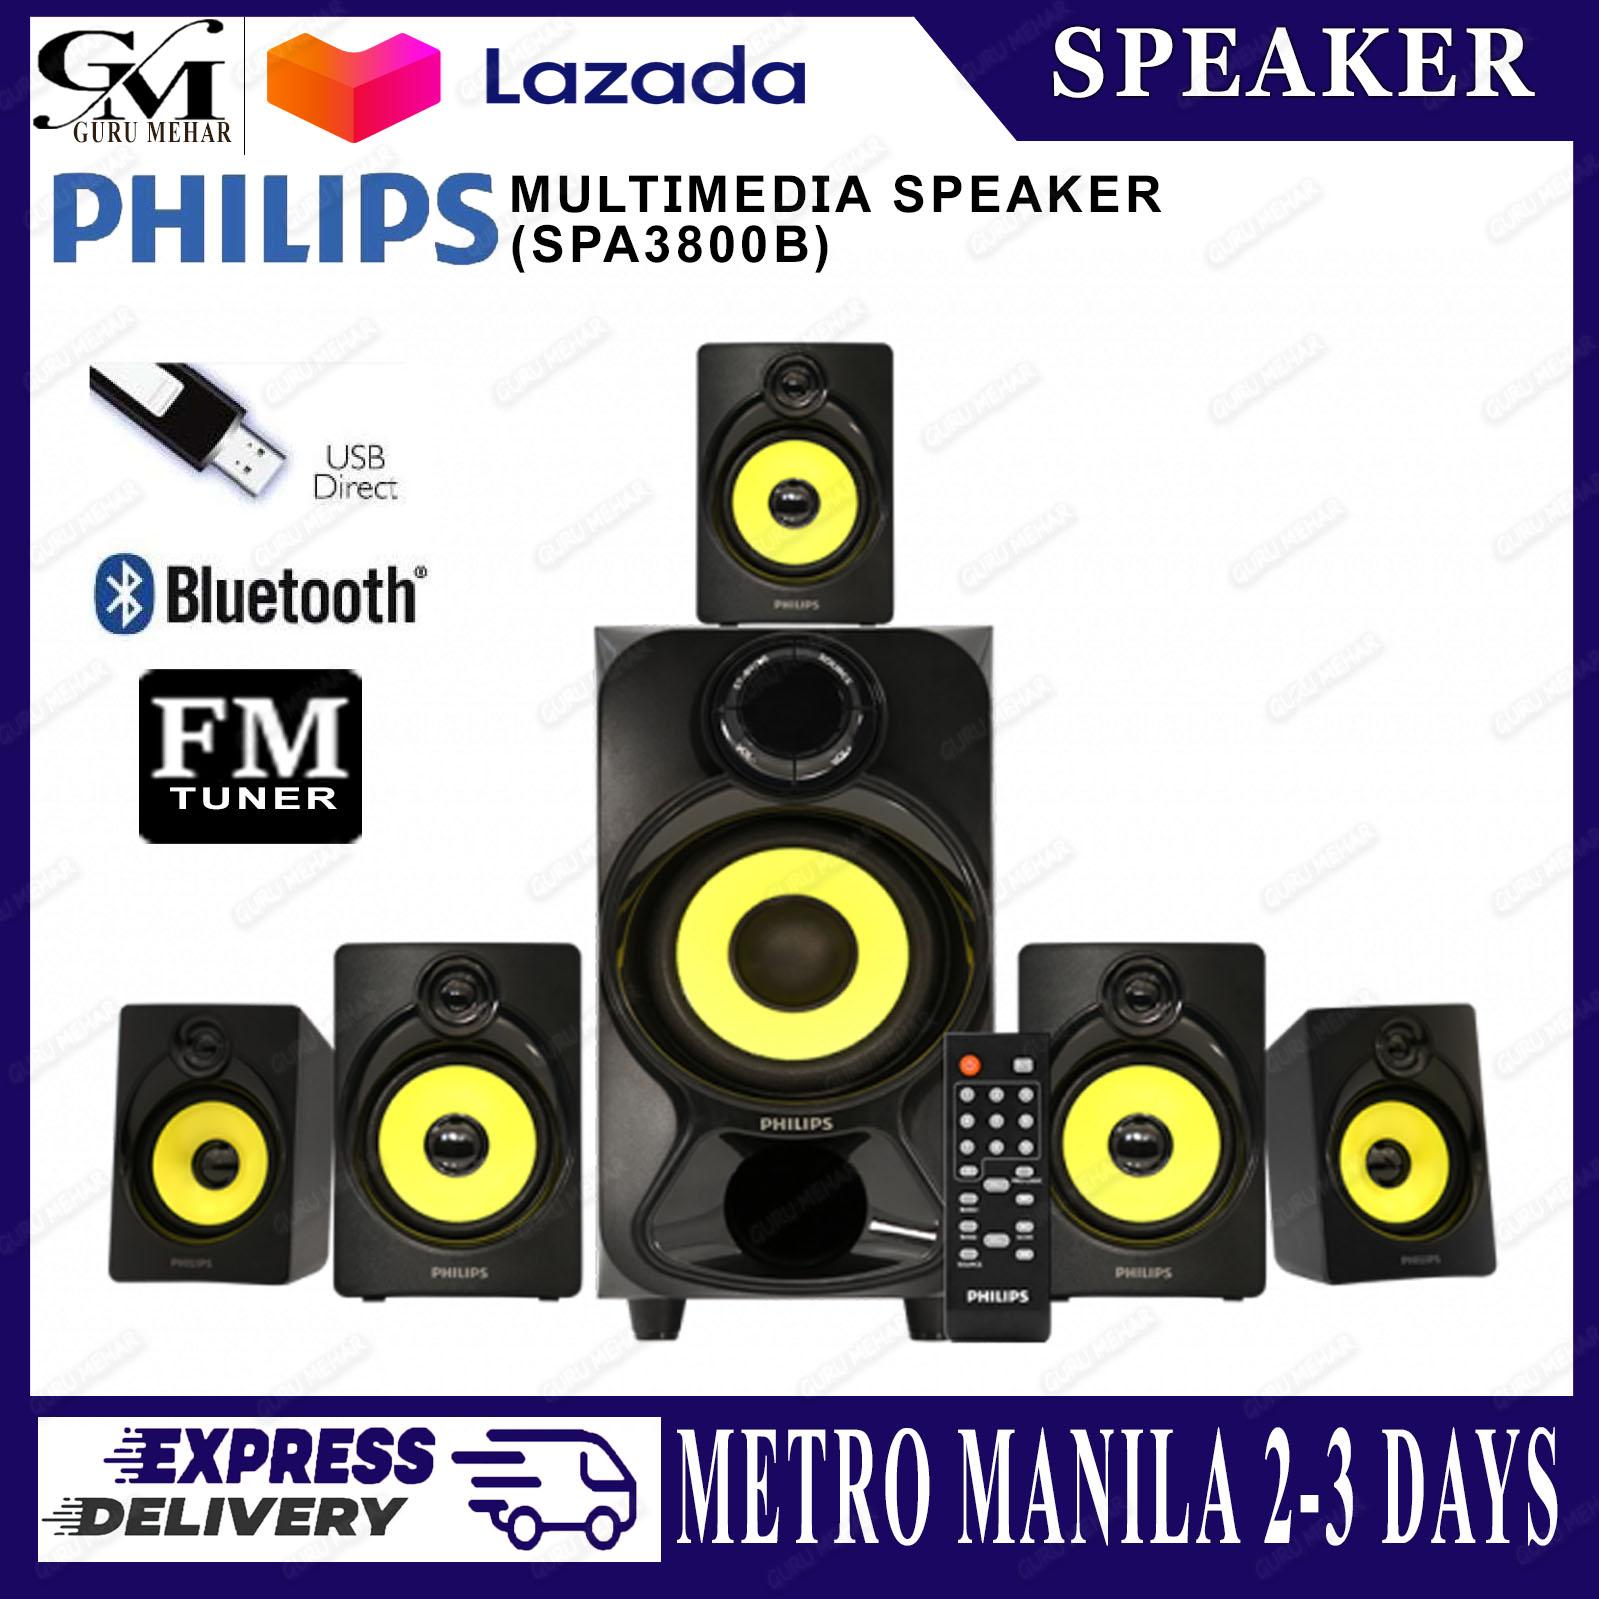 philips 5.1 bluetooth speakers